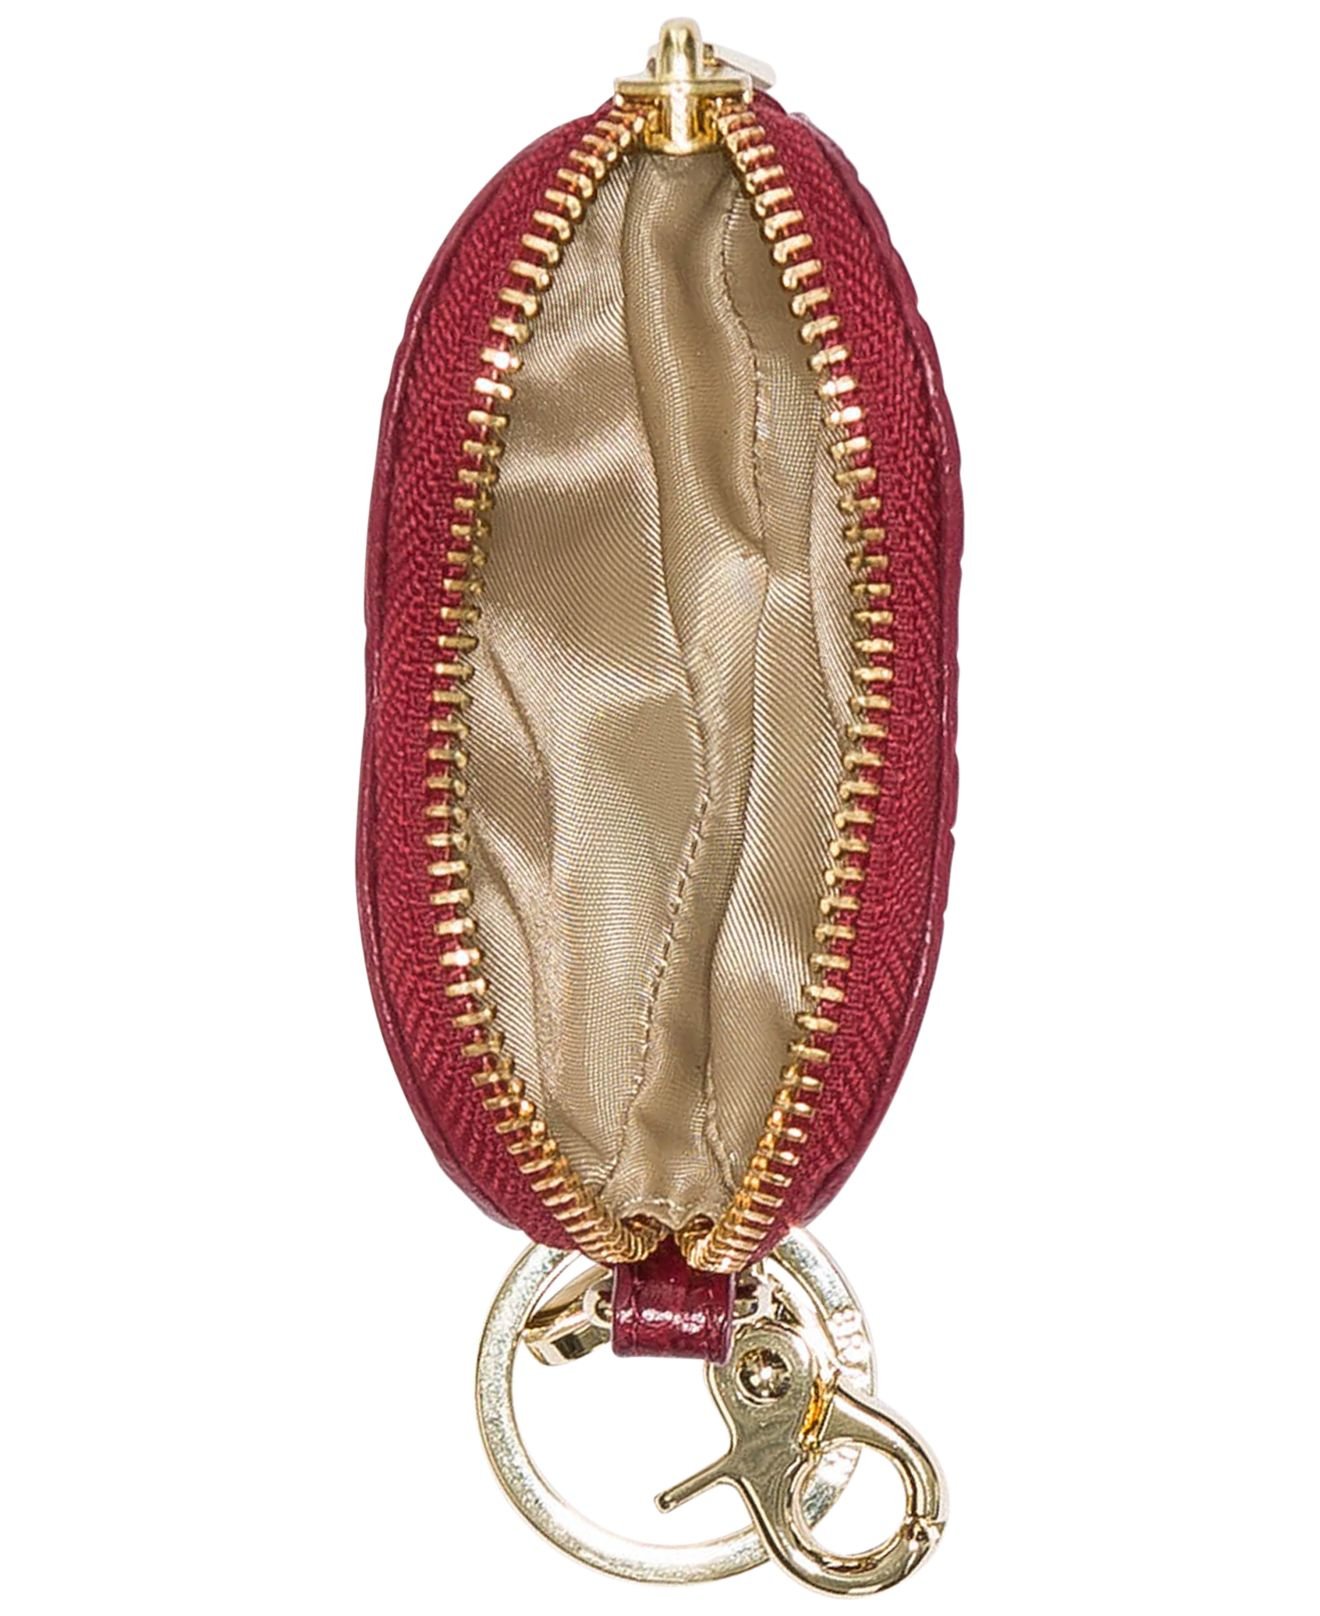 Brahmin Handbag – From the Heart Consignment